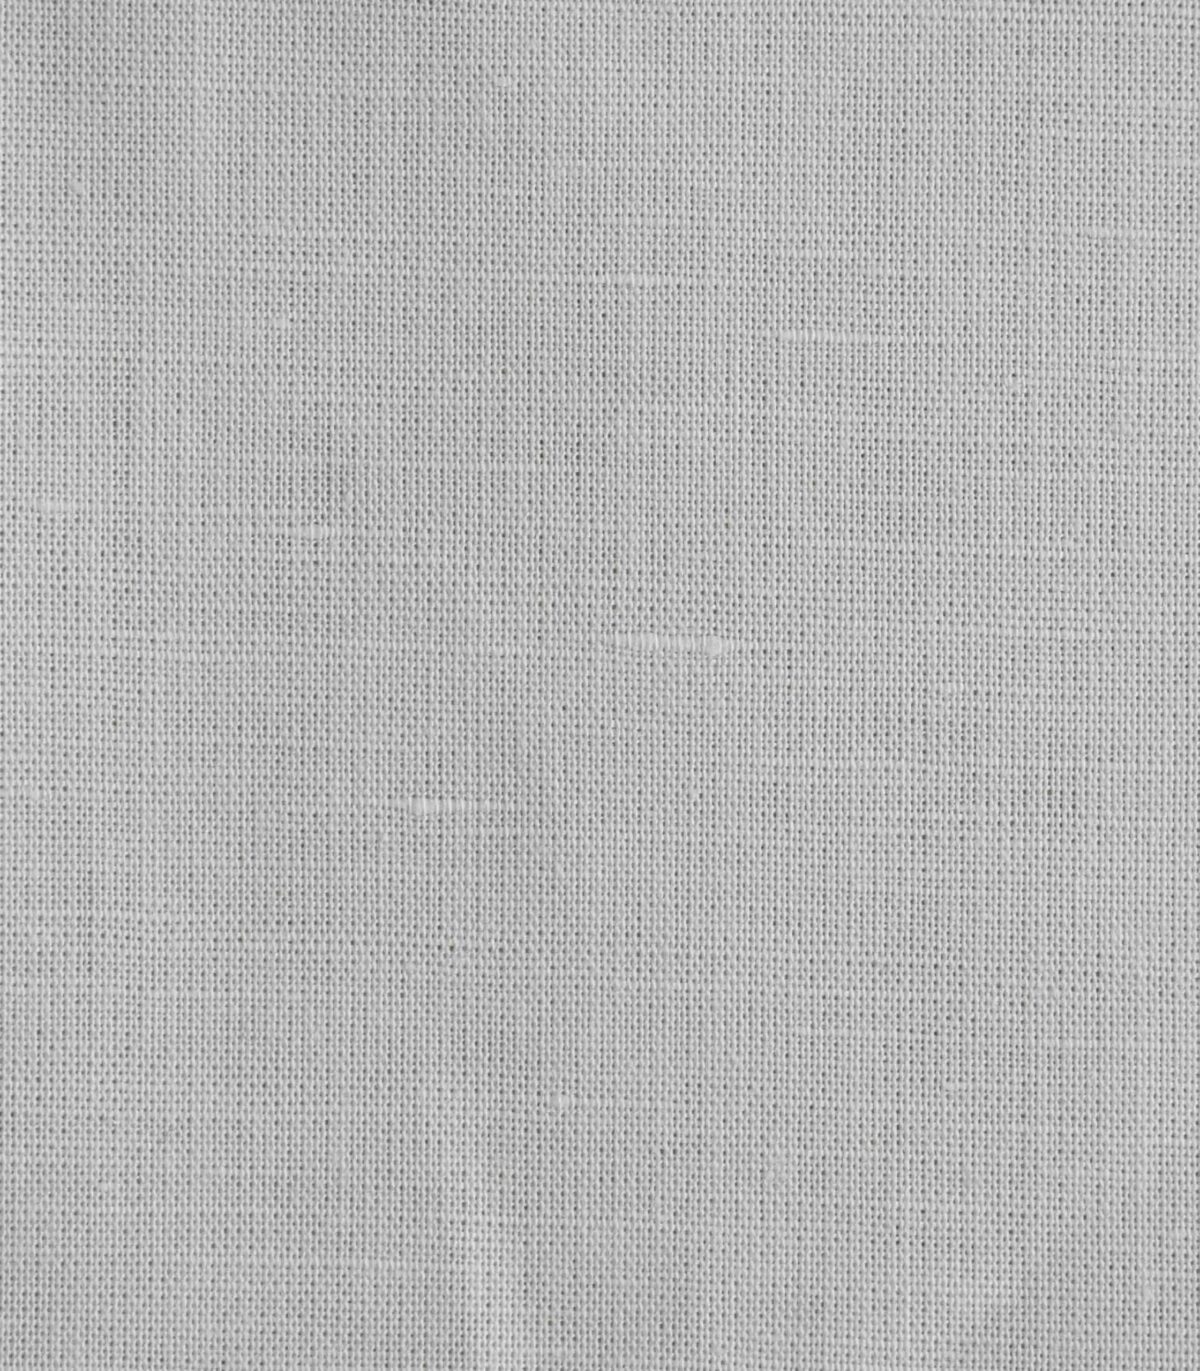 Cotton Linen Material RFD Woven Fabric